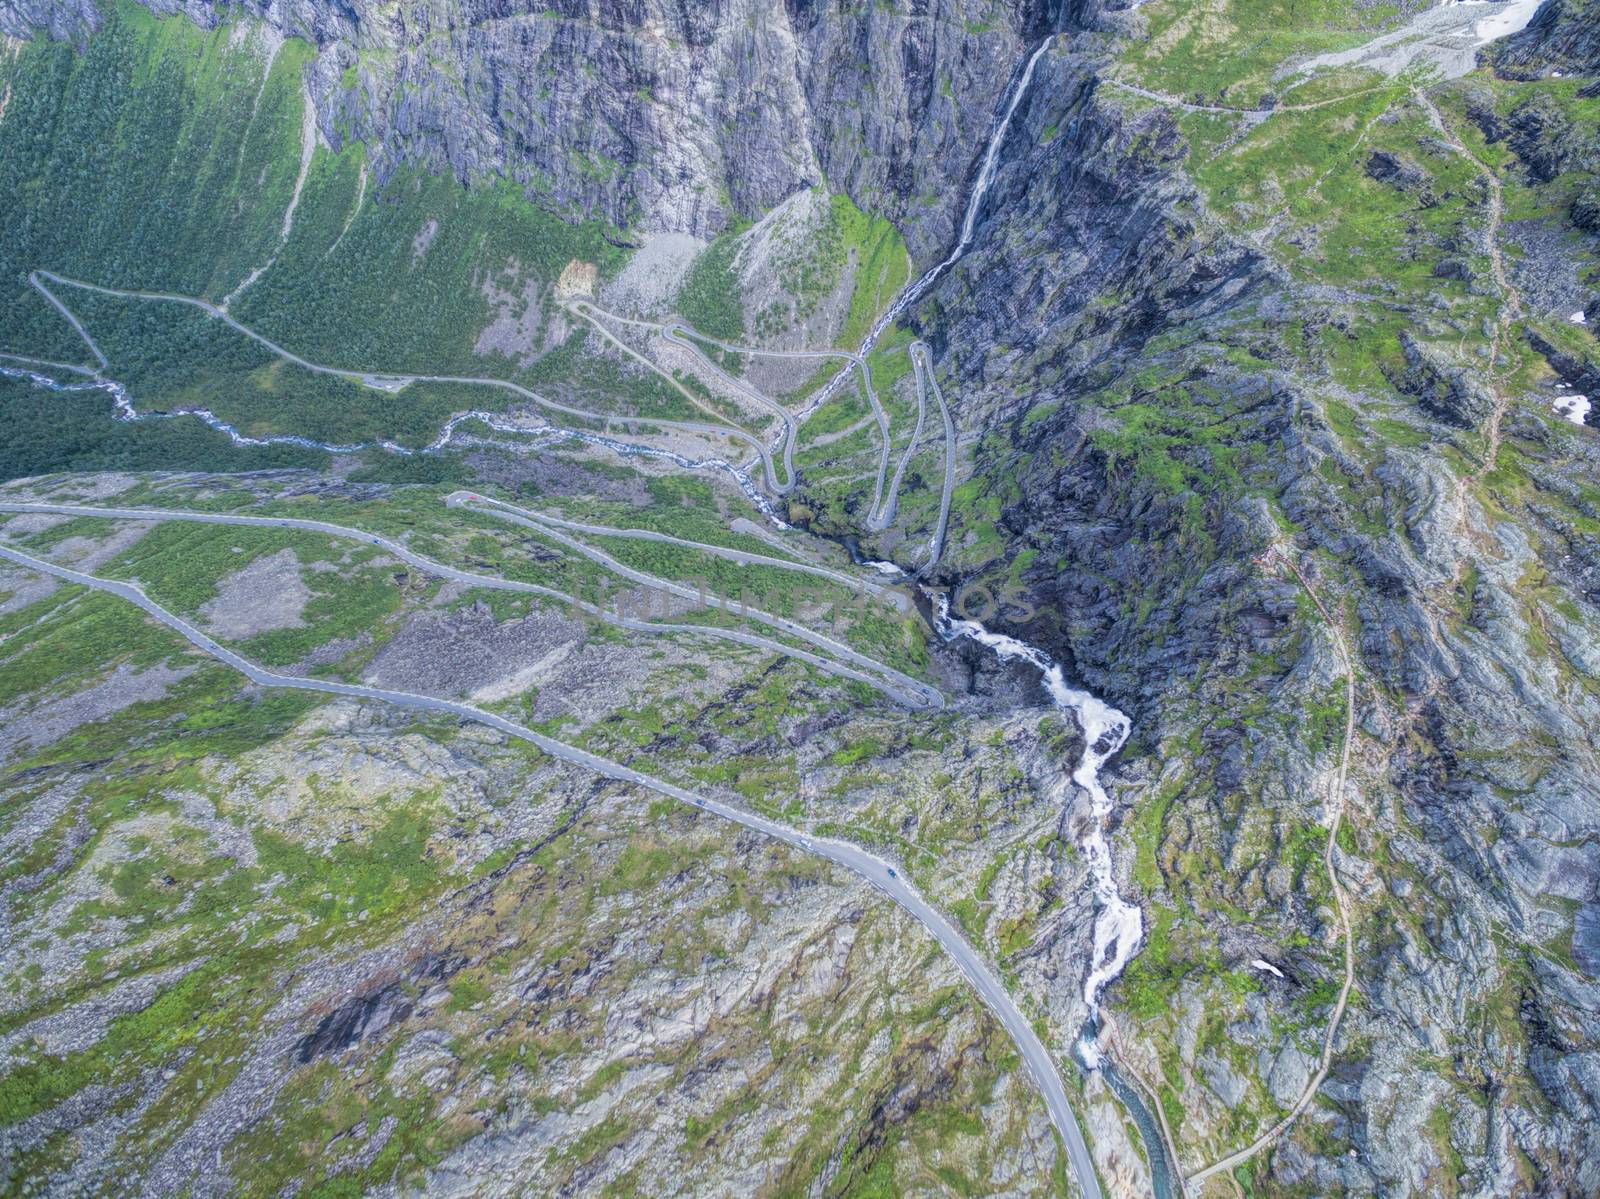 Serpentine mountain road of Trollstigen in Norway, popular tourist attraction